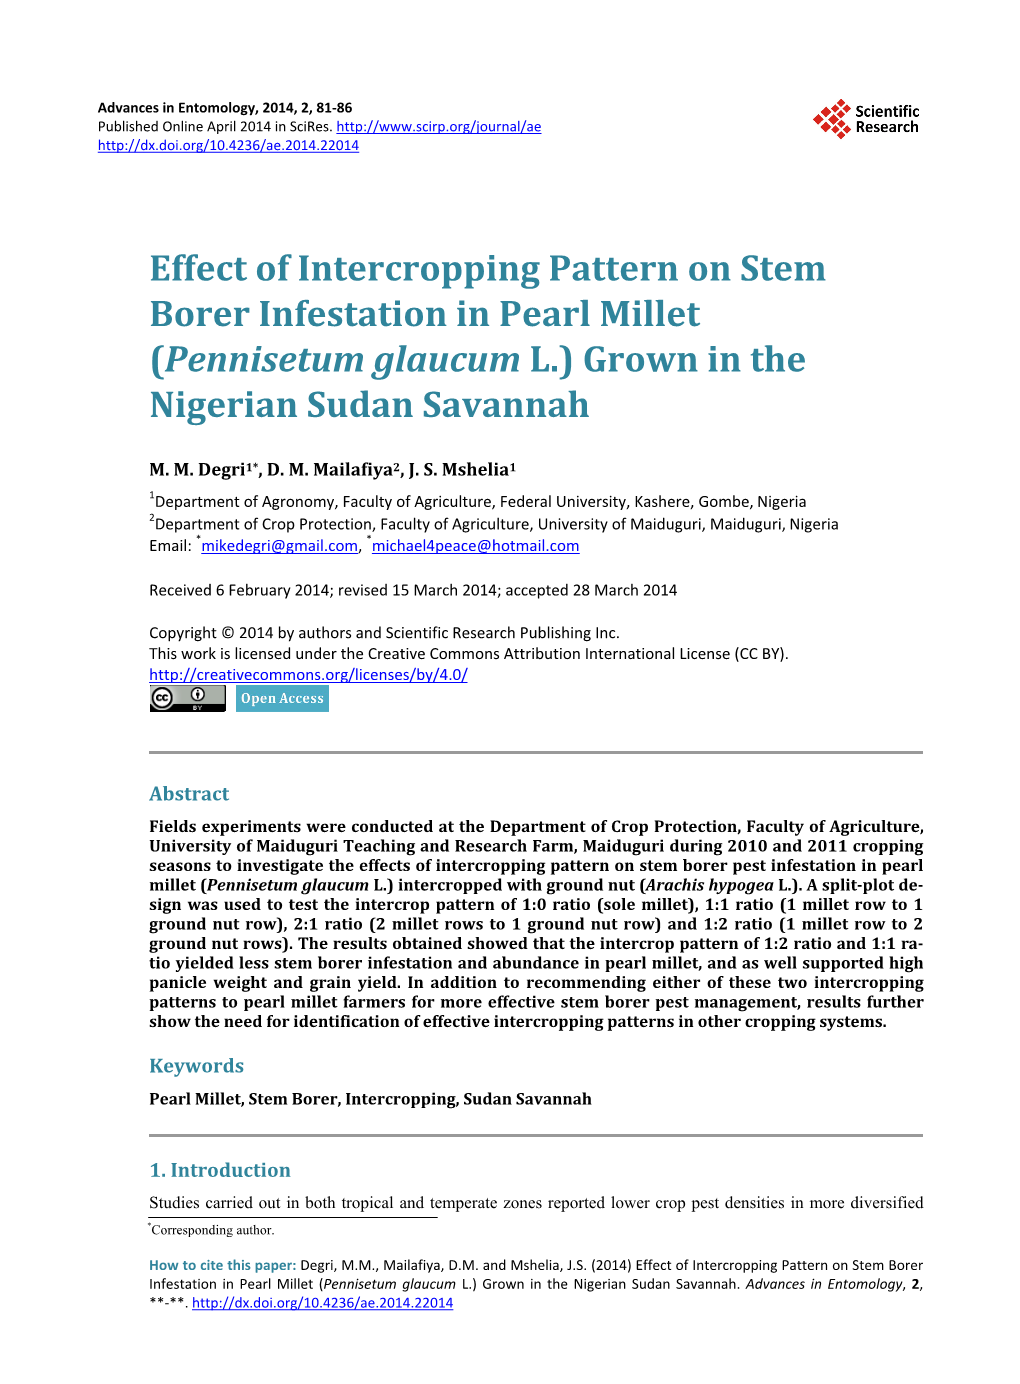 Effect of Intercropping Pattern on Stem Borer Infestation in Pearl Millet (Pennisetum Glaucum L.) Grown in the Nigerian Sudan Savannah